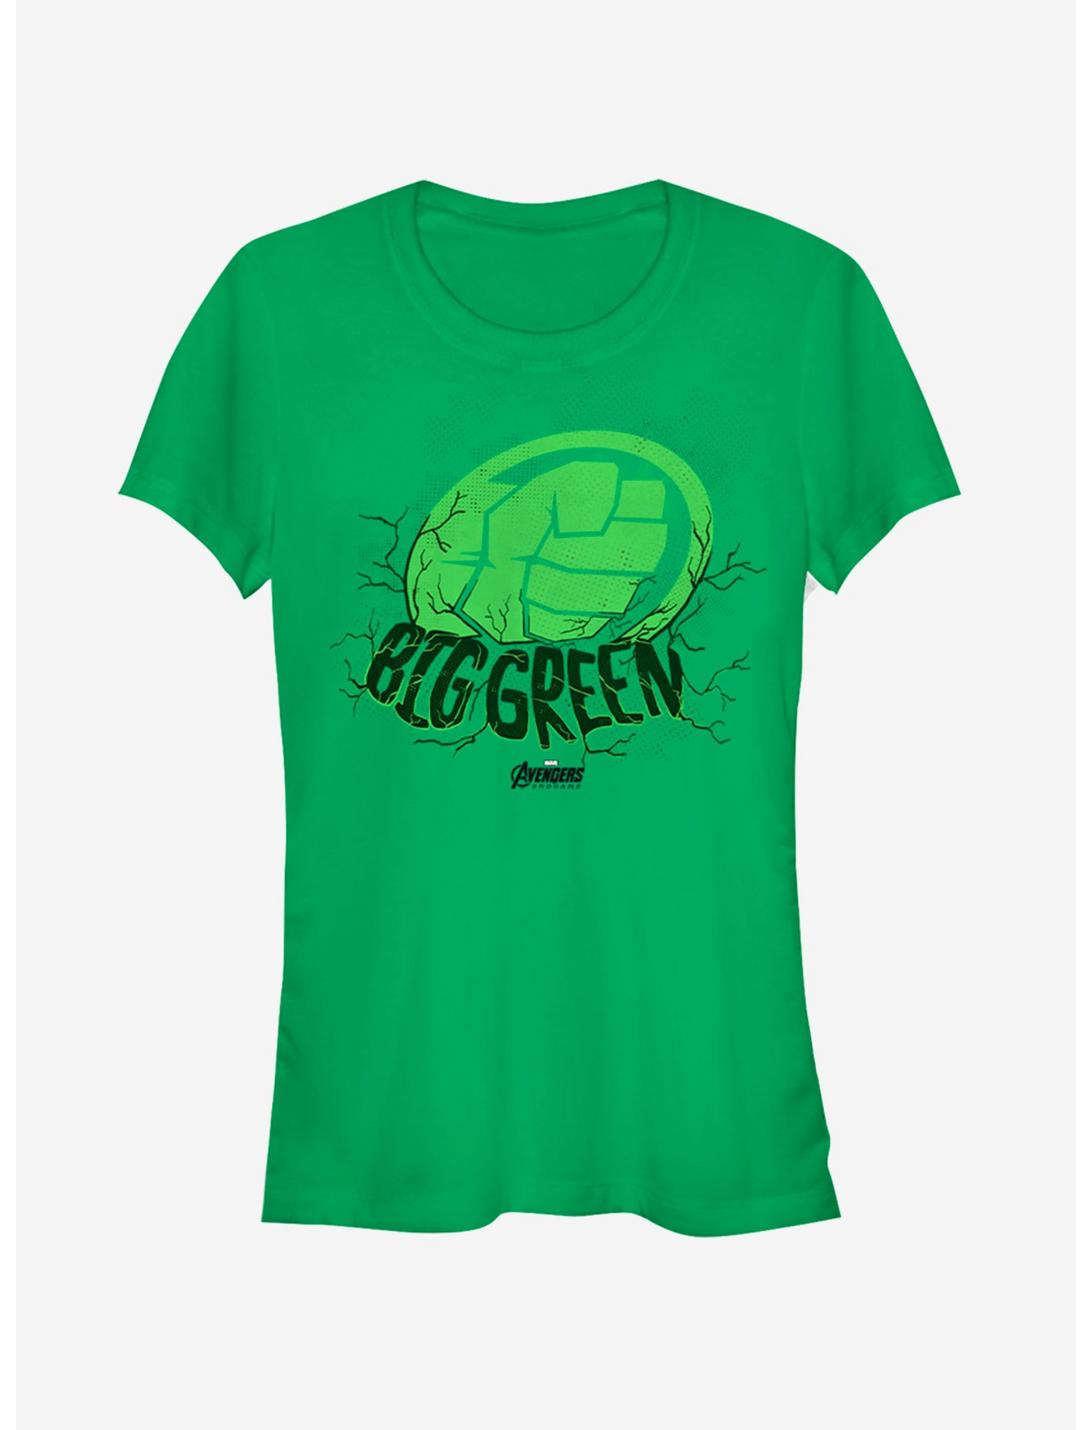 Marvel Avengers: Endgame Big Green Girls Kelly Green T-Shirt, KELLY, hi-res